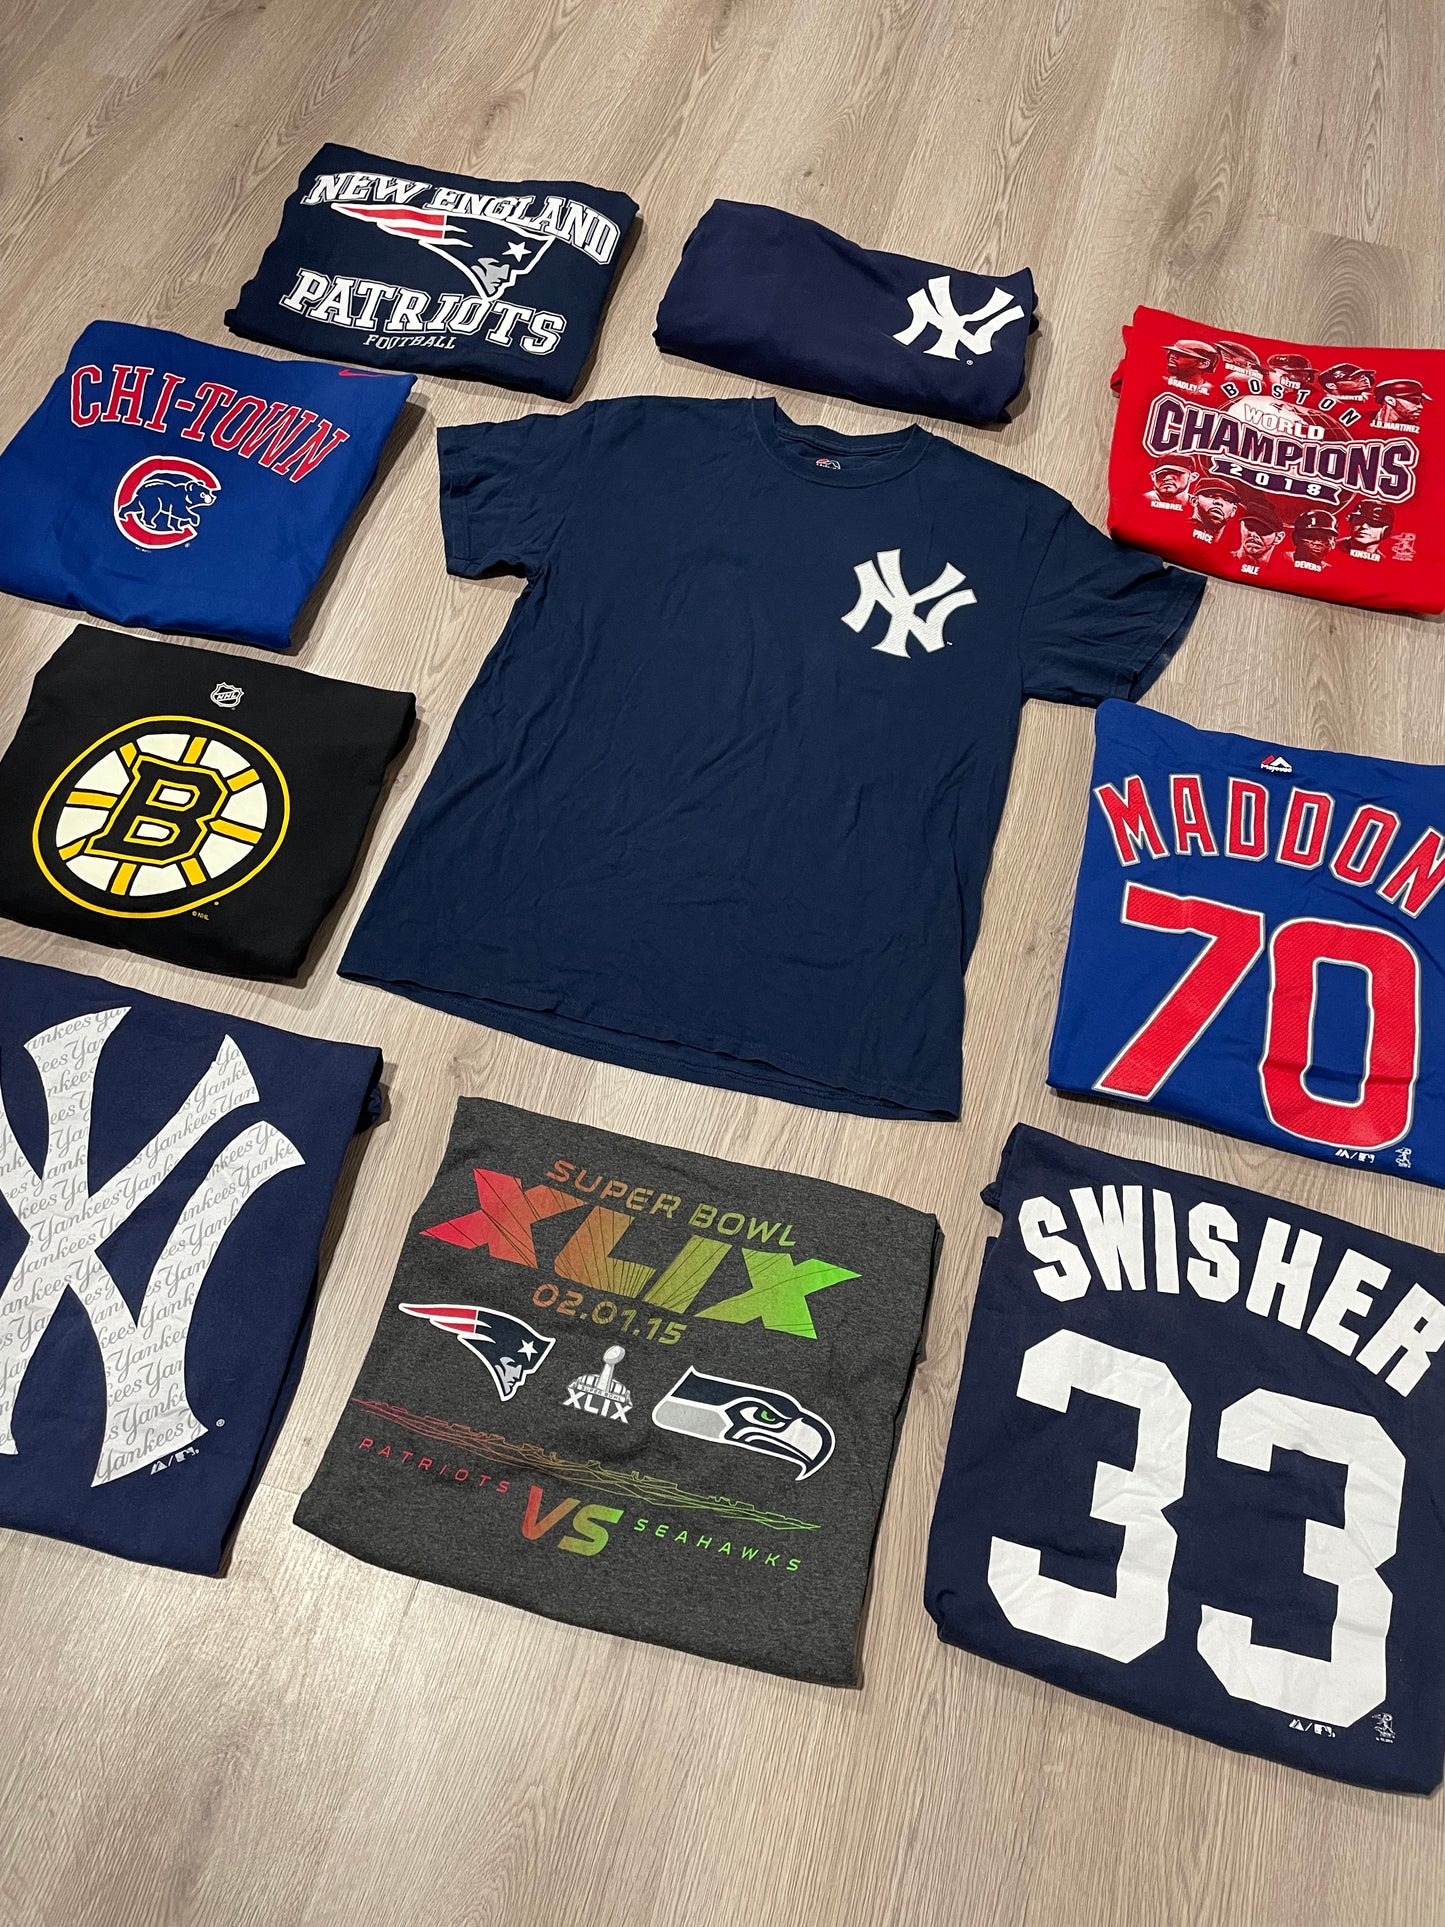 Box mix T-shirt Jordan - NFL - NHL - MLB - NBA vari brand  a pezzo